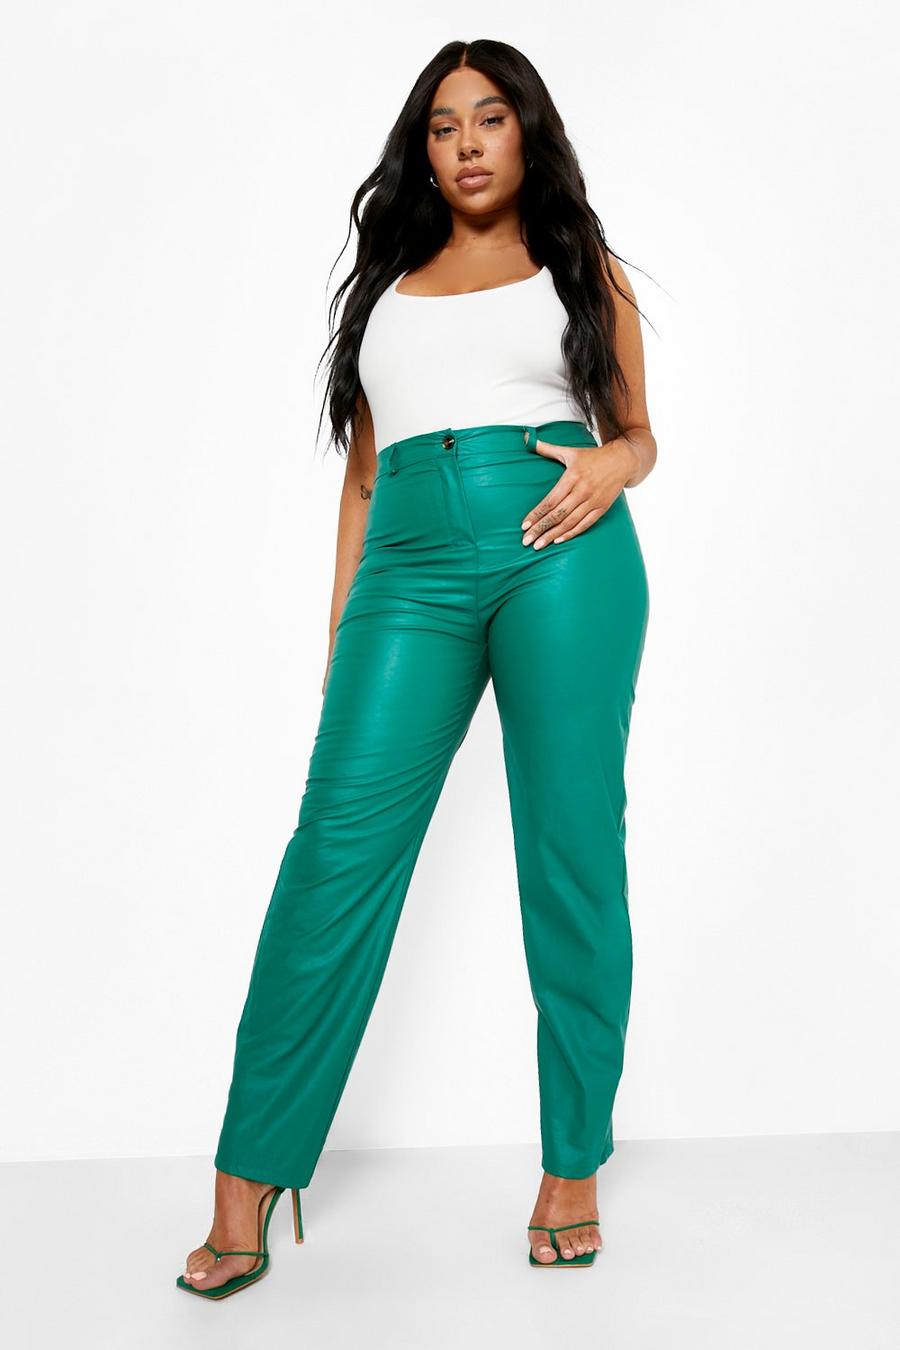 Pantaloni a gamba ampia Plus Size in PU in colori brillanti, Green verde